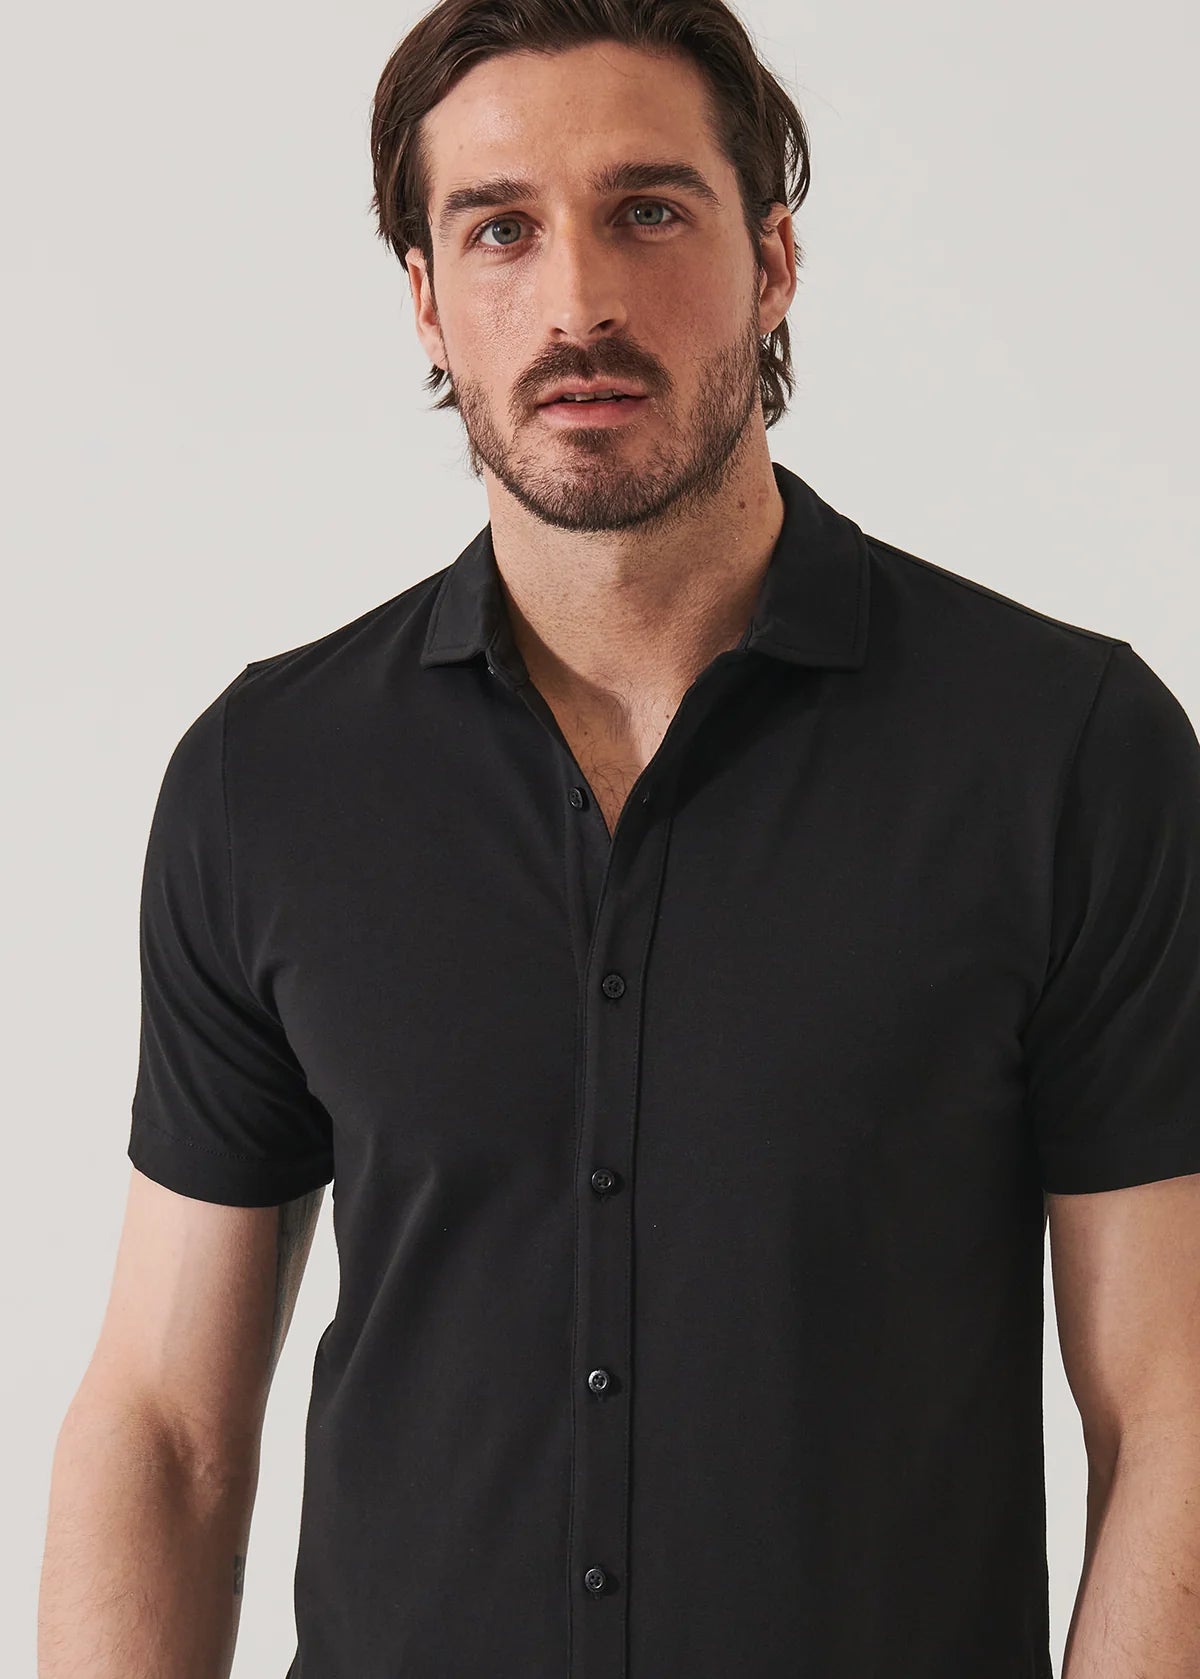 Patrick Assaraf SS Iconic Shirt Black